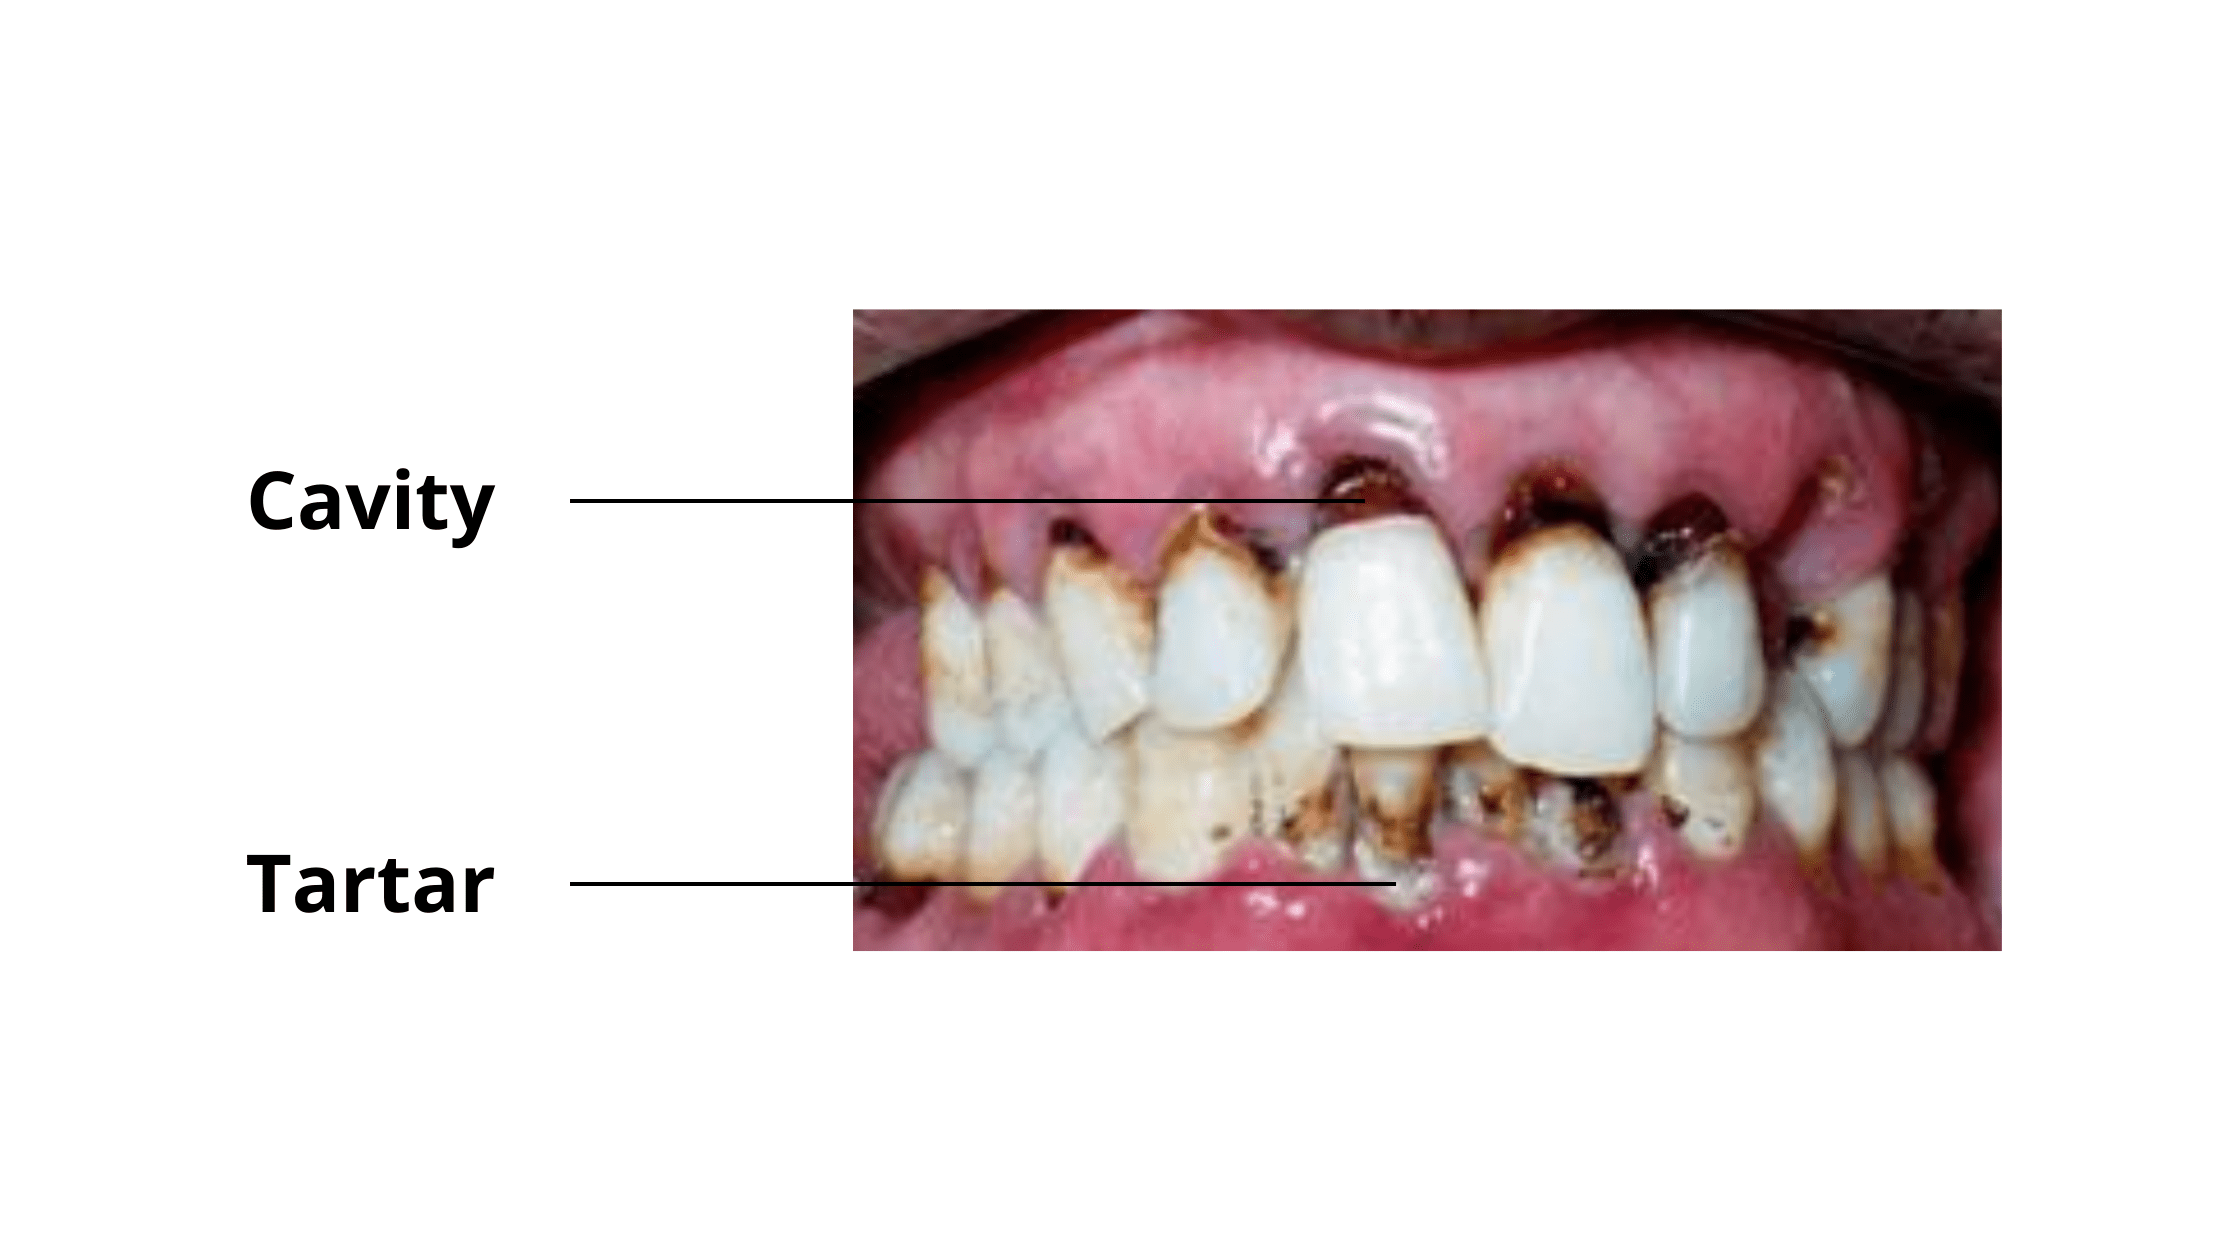 Black tartar vs cavity: a clinical image